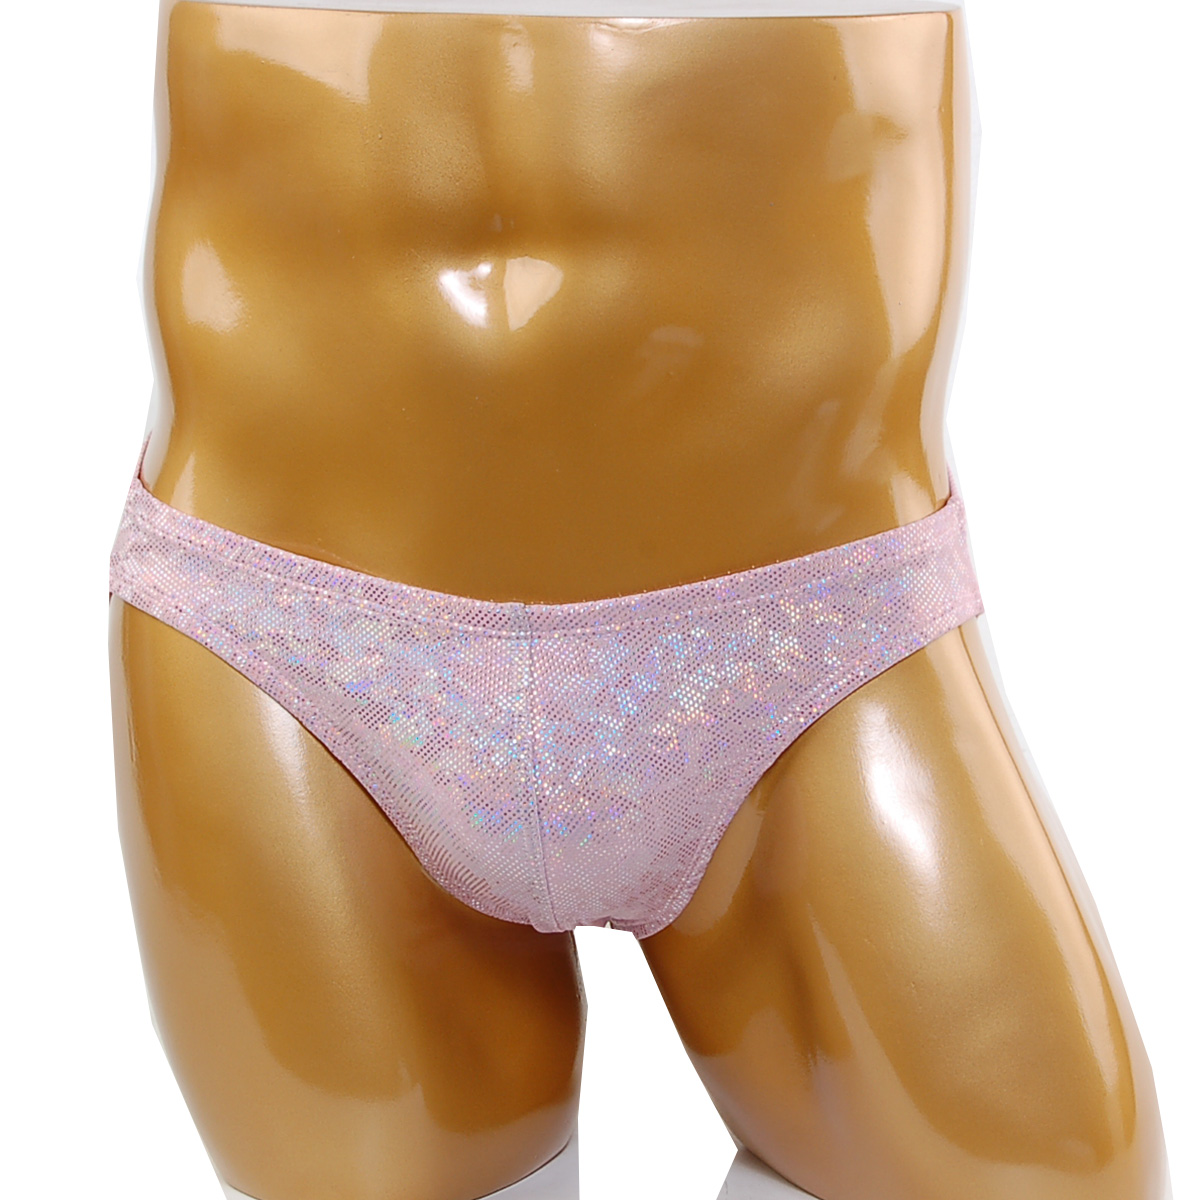 [POSINGWEAR] Pink Crystal Bowl Posing Suit